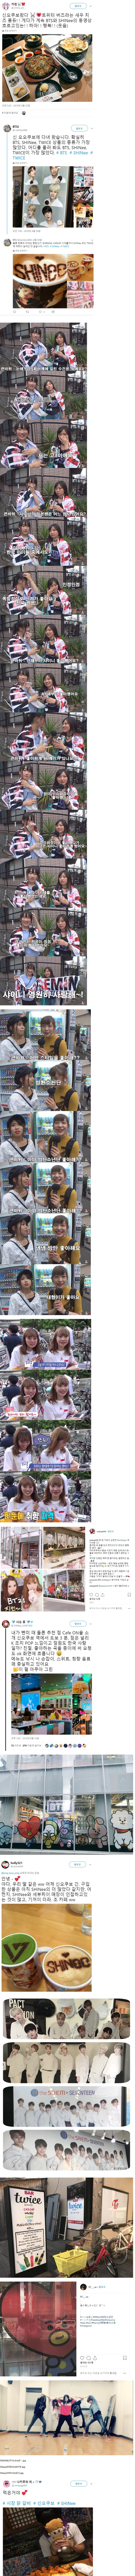 Screenshot_2018-09-02 최근 일본 10_20대들 사이에서 반응이 뜨겁다는 한국그룹들 JPG.jpg